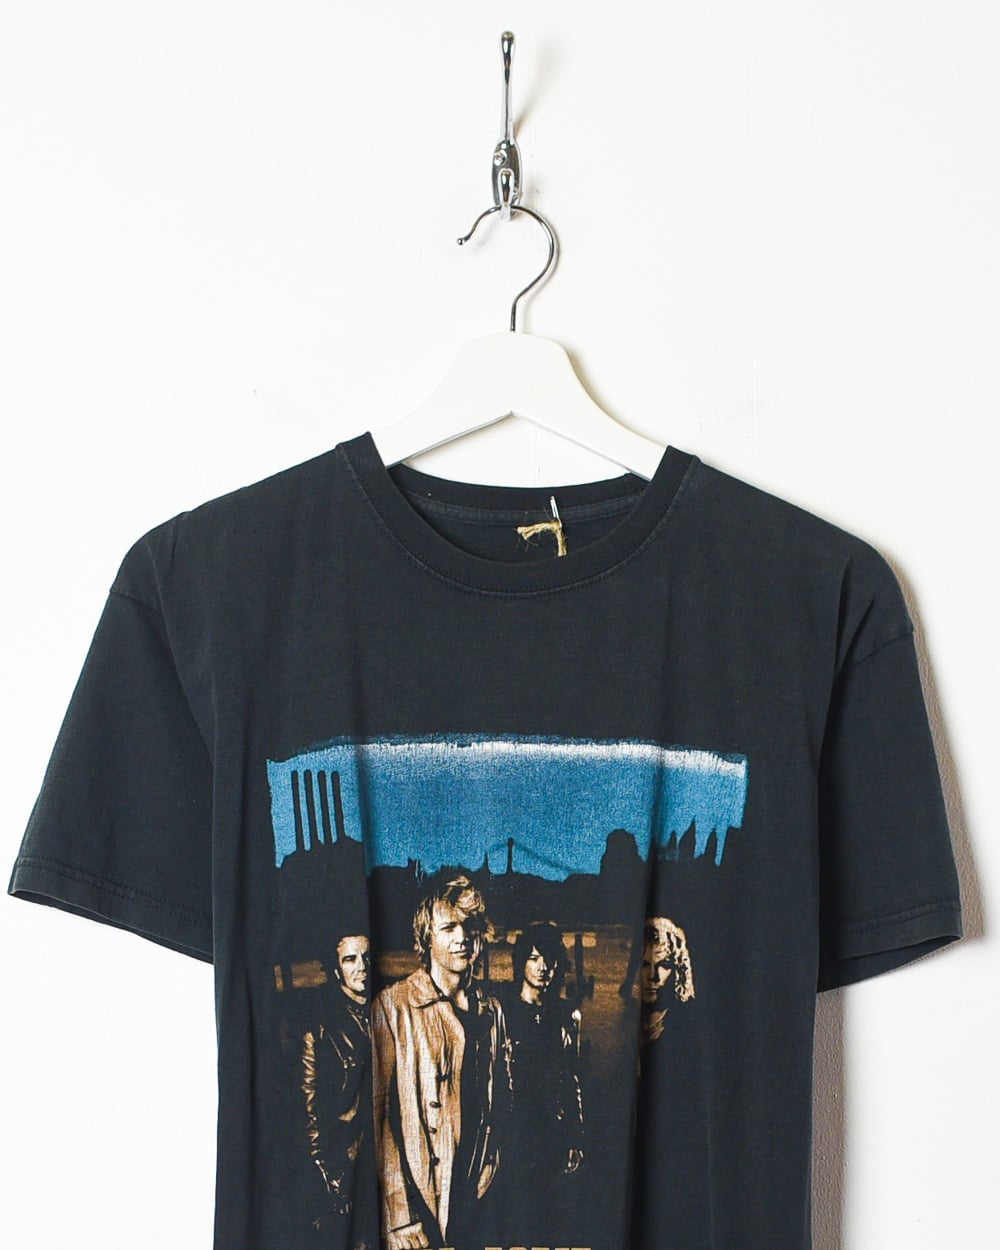 Black Bon Jovi Have A Nice Day Graphic T-Shirt - Medium